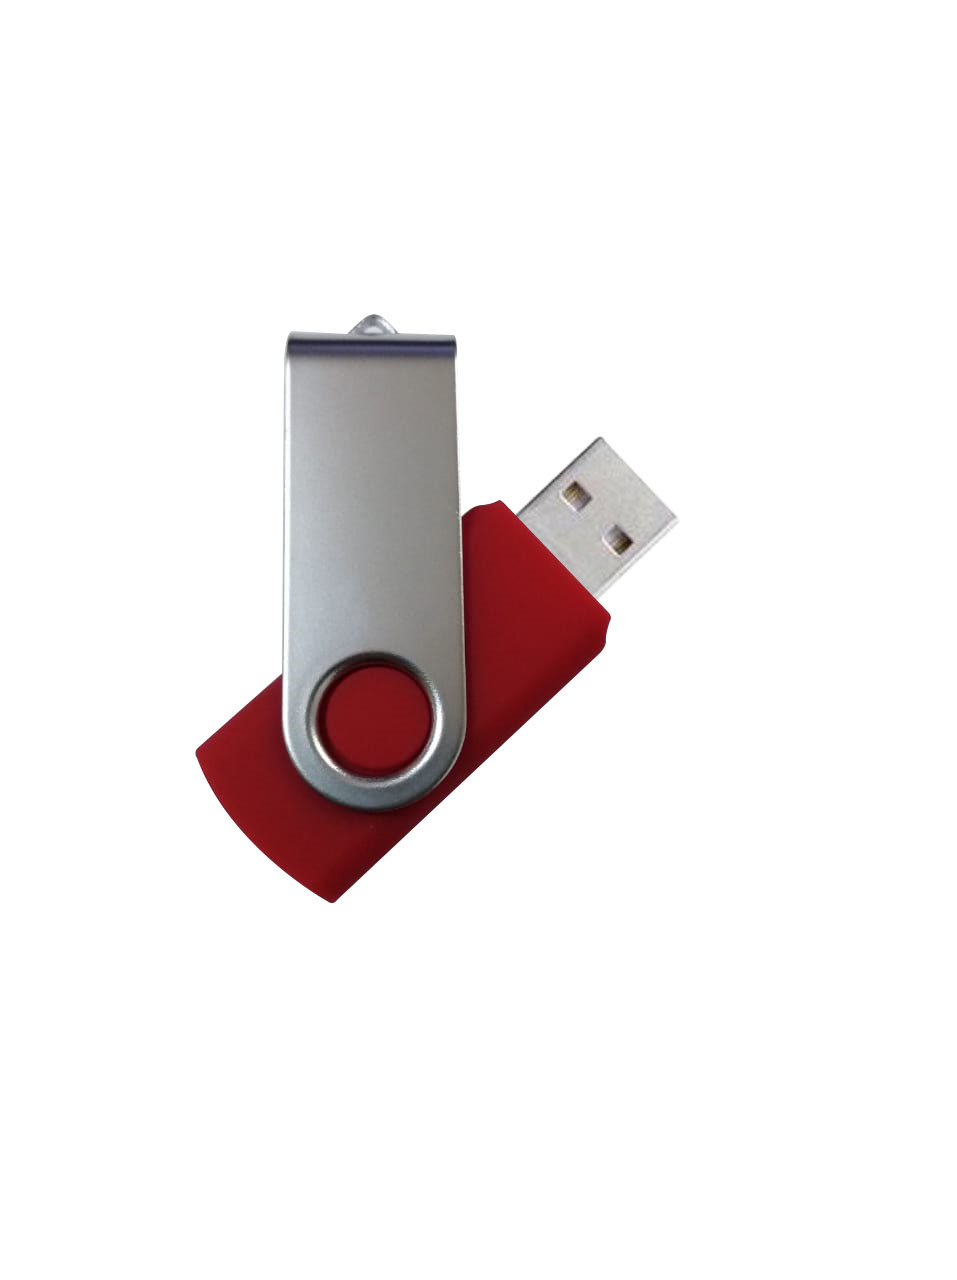 USB-BA-001 16, USB GIRATORIA 16GB